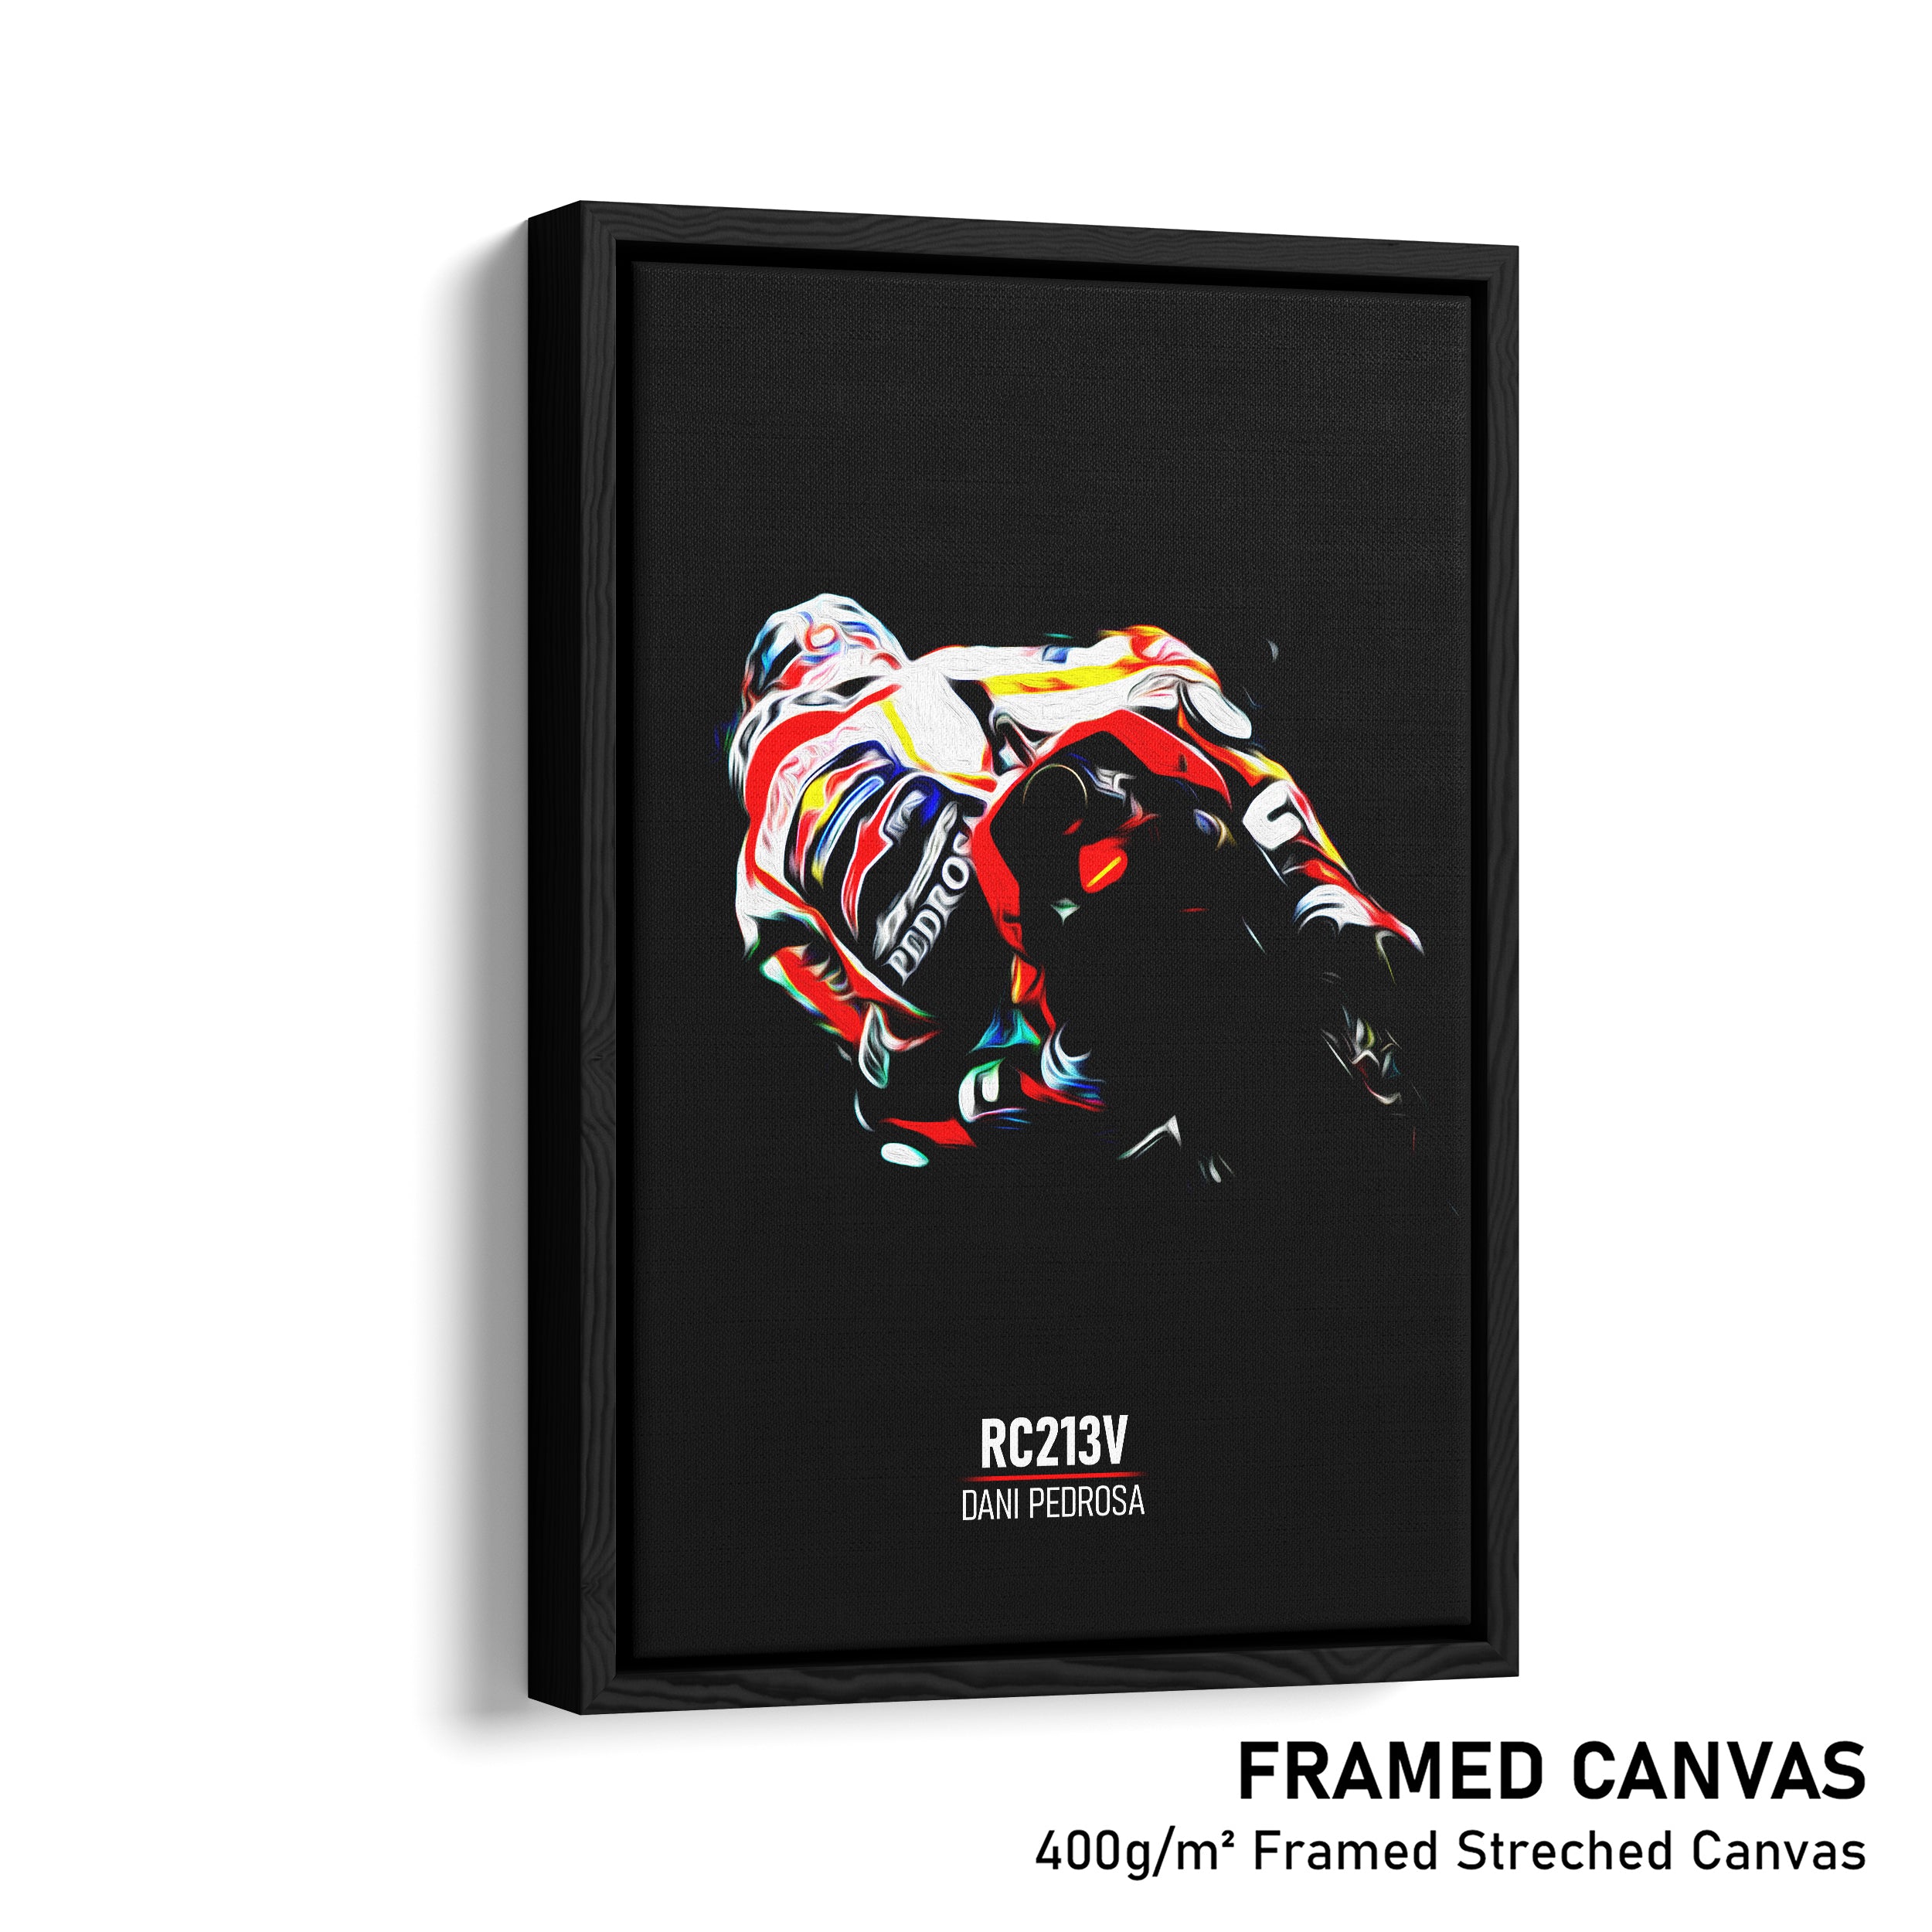 Honda RC213V, Dani Pedrosa 2018 - MotoGP Print